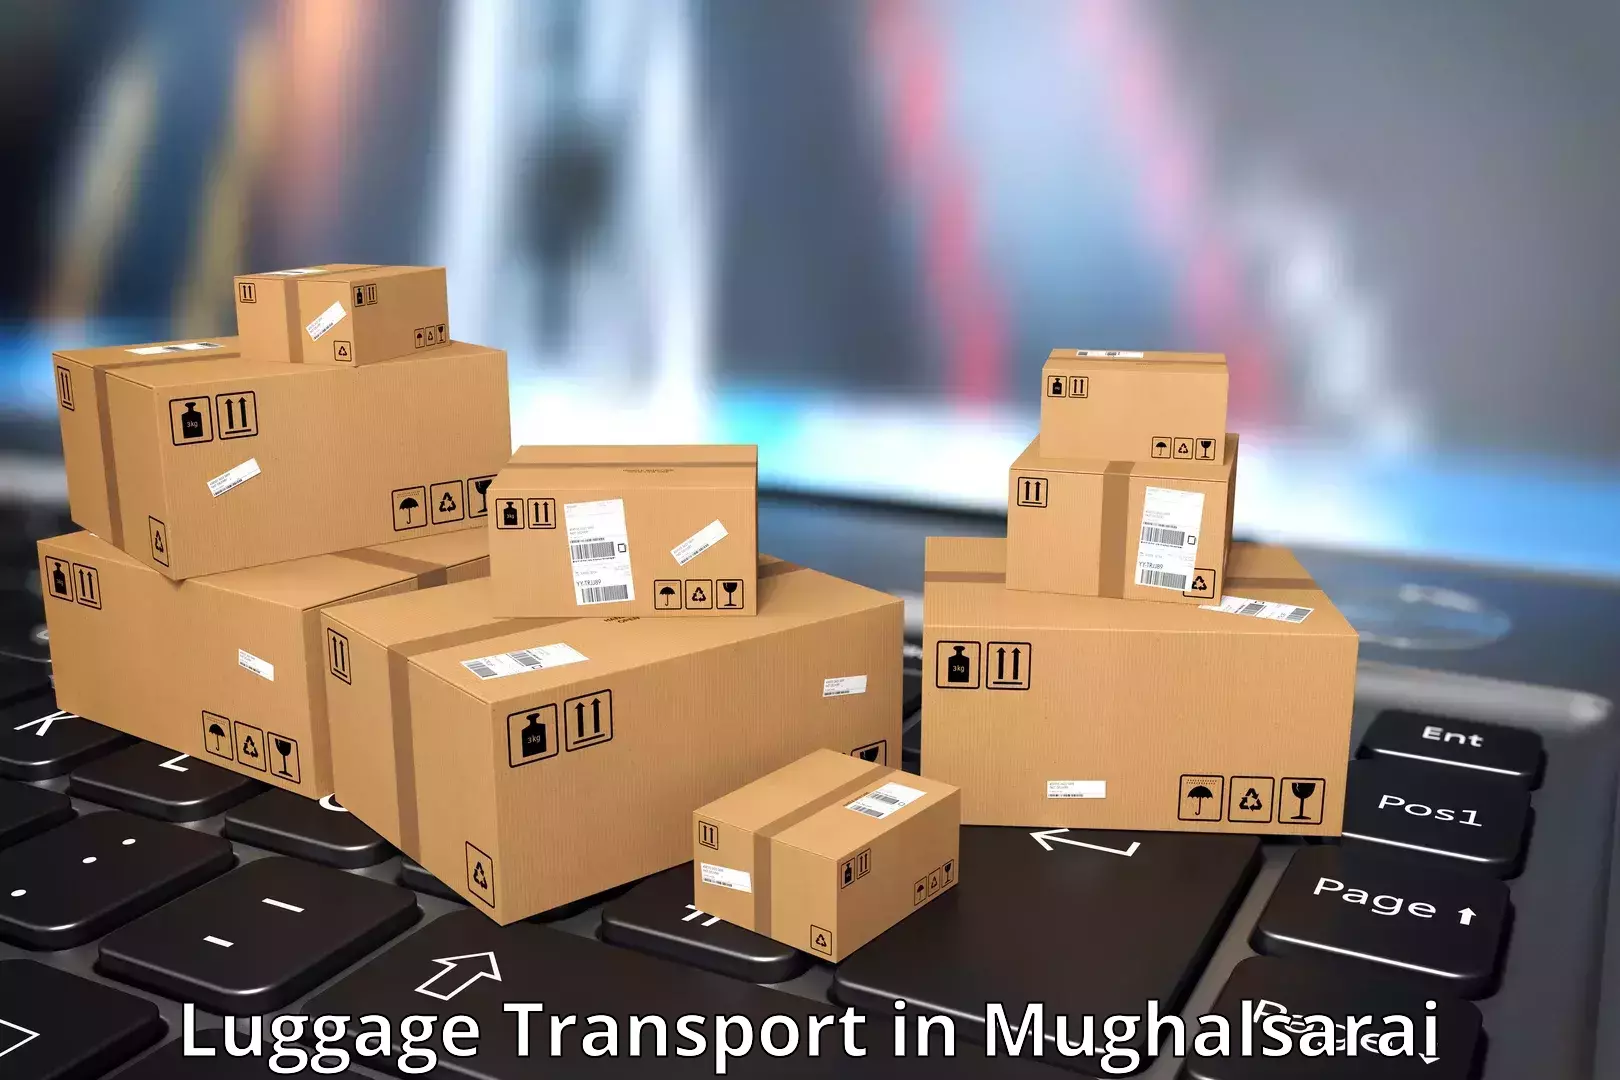 Luggage transit service in Mughalsarai